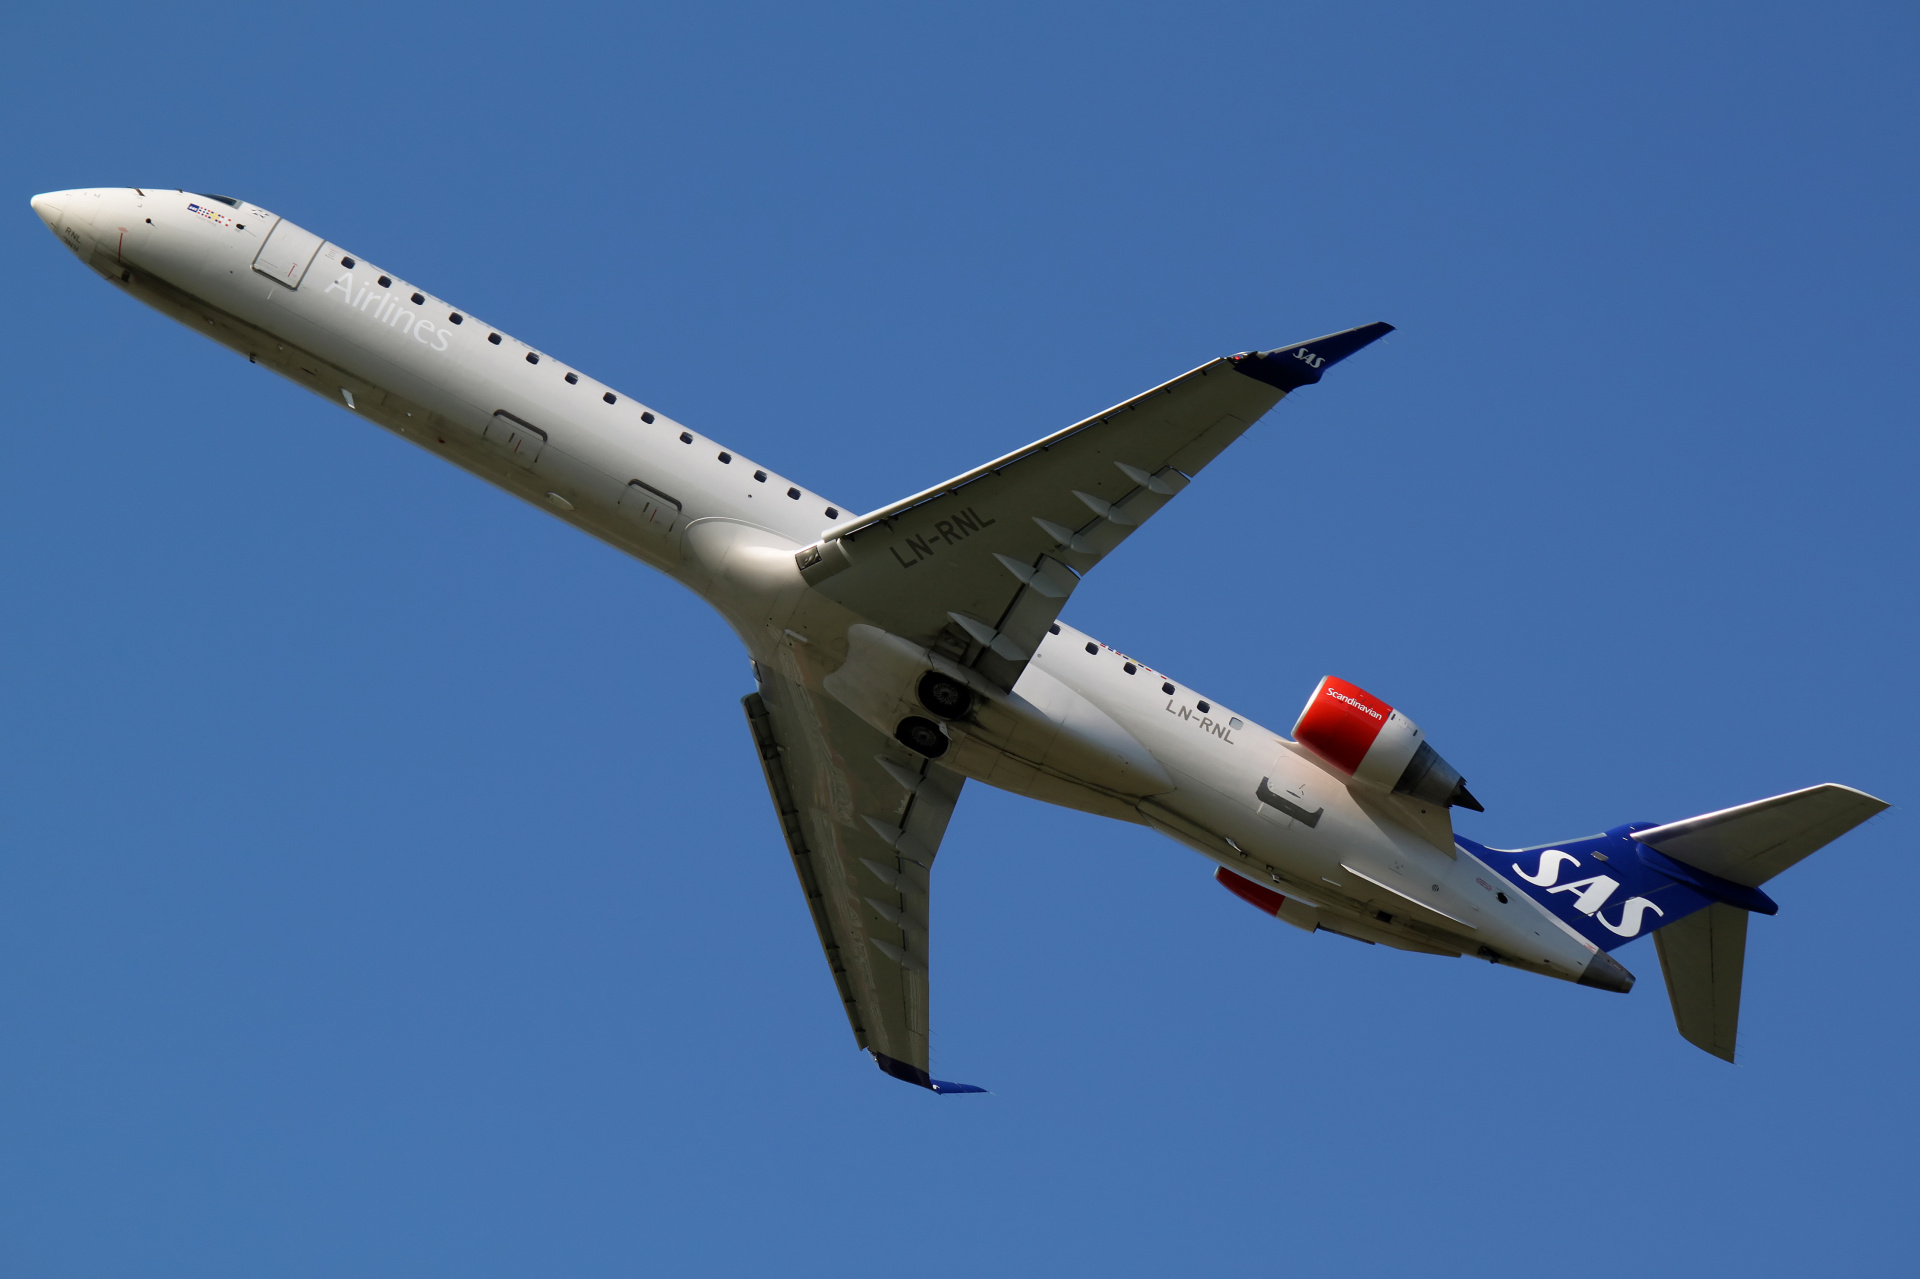 LN-RNL (Samoloty » Spotting na EPWA » Mitsubishi Regional Jet » CRJ-900 » SAS Scandinavian Airlines)